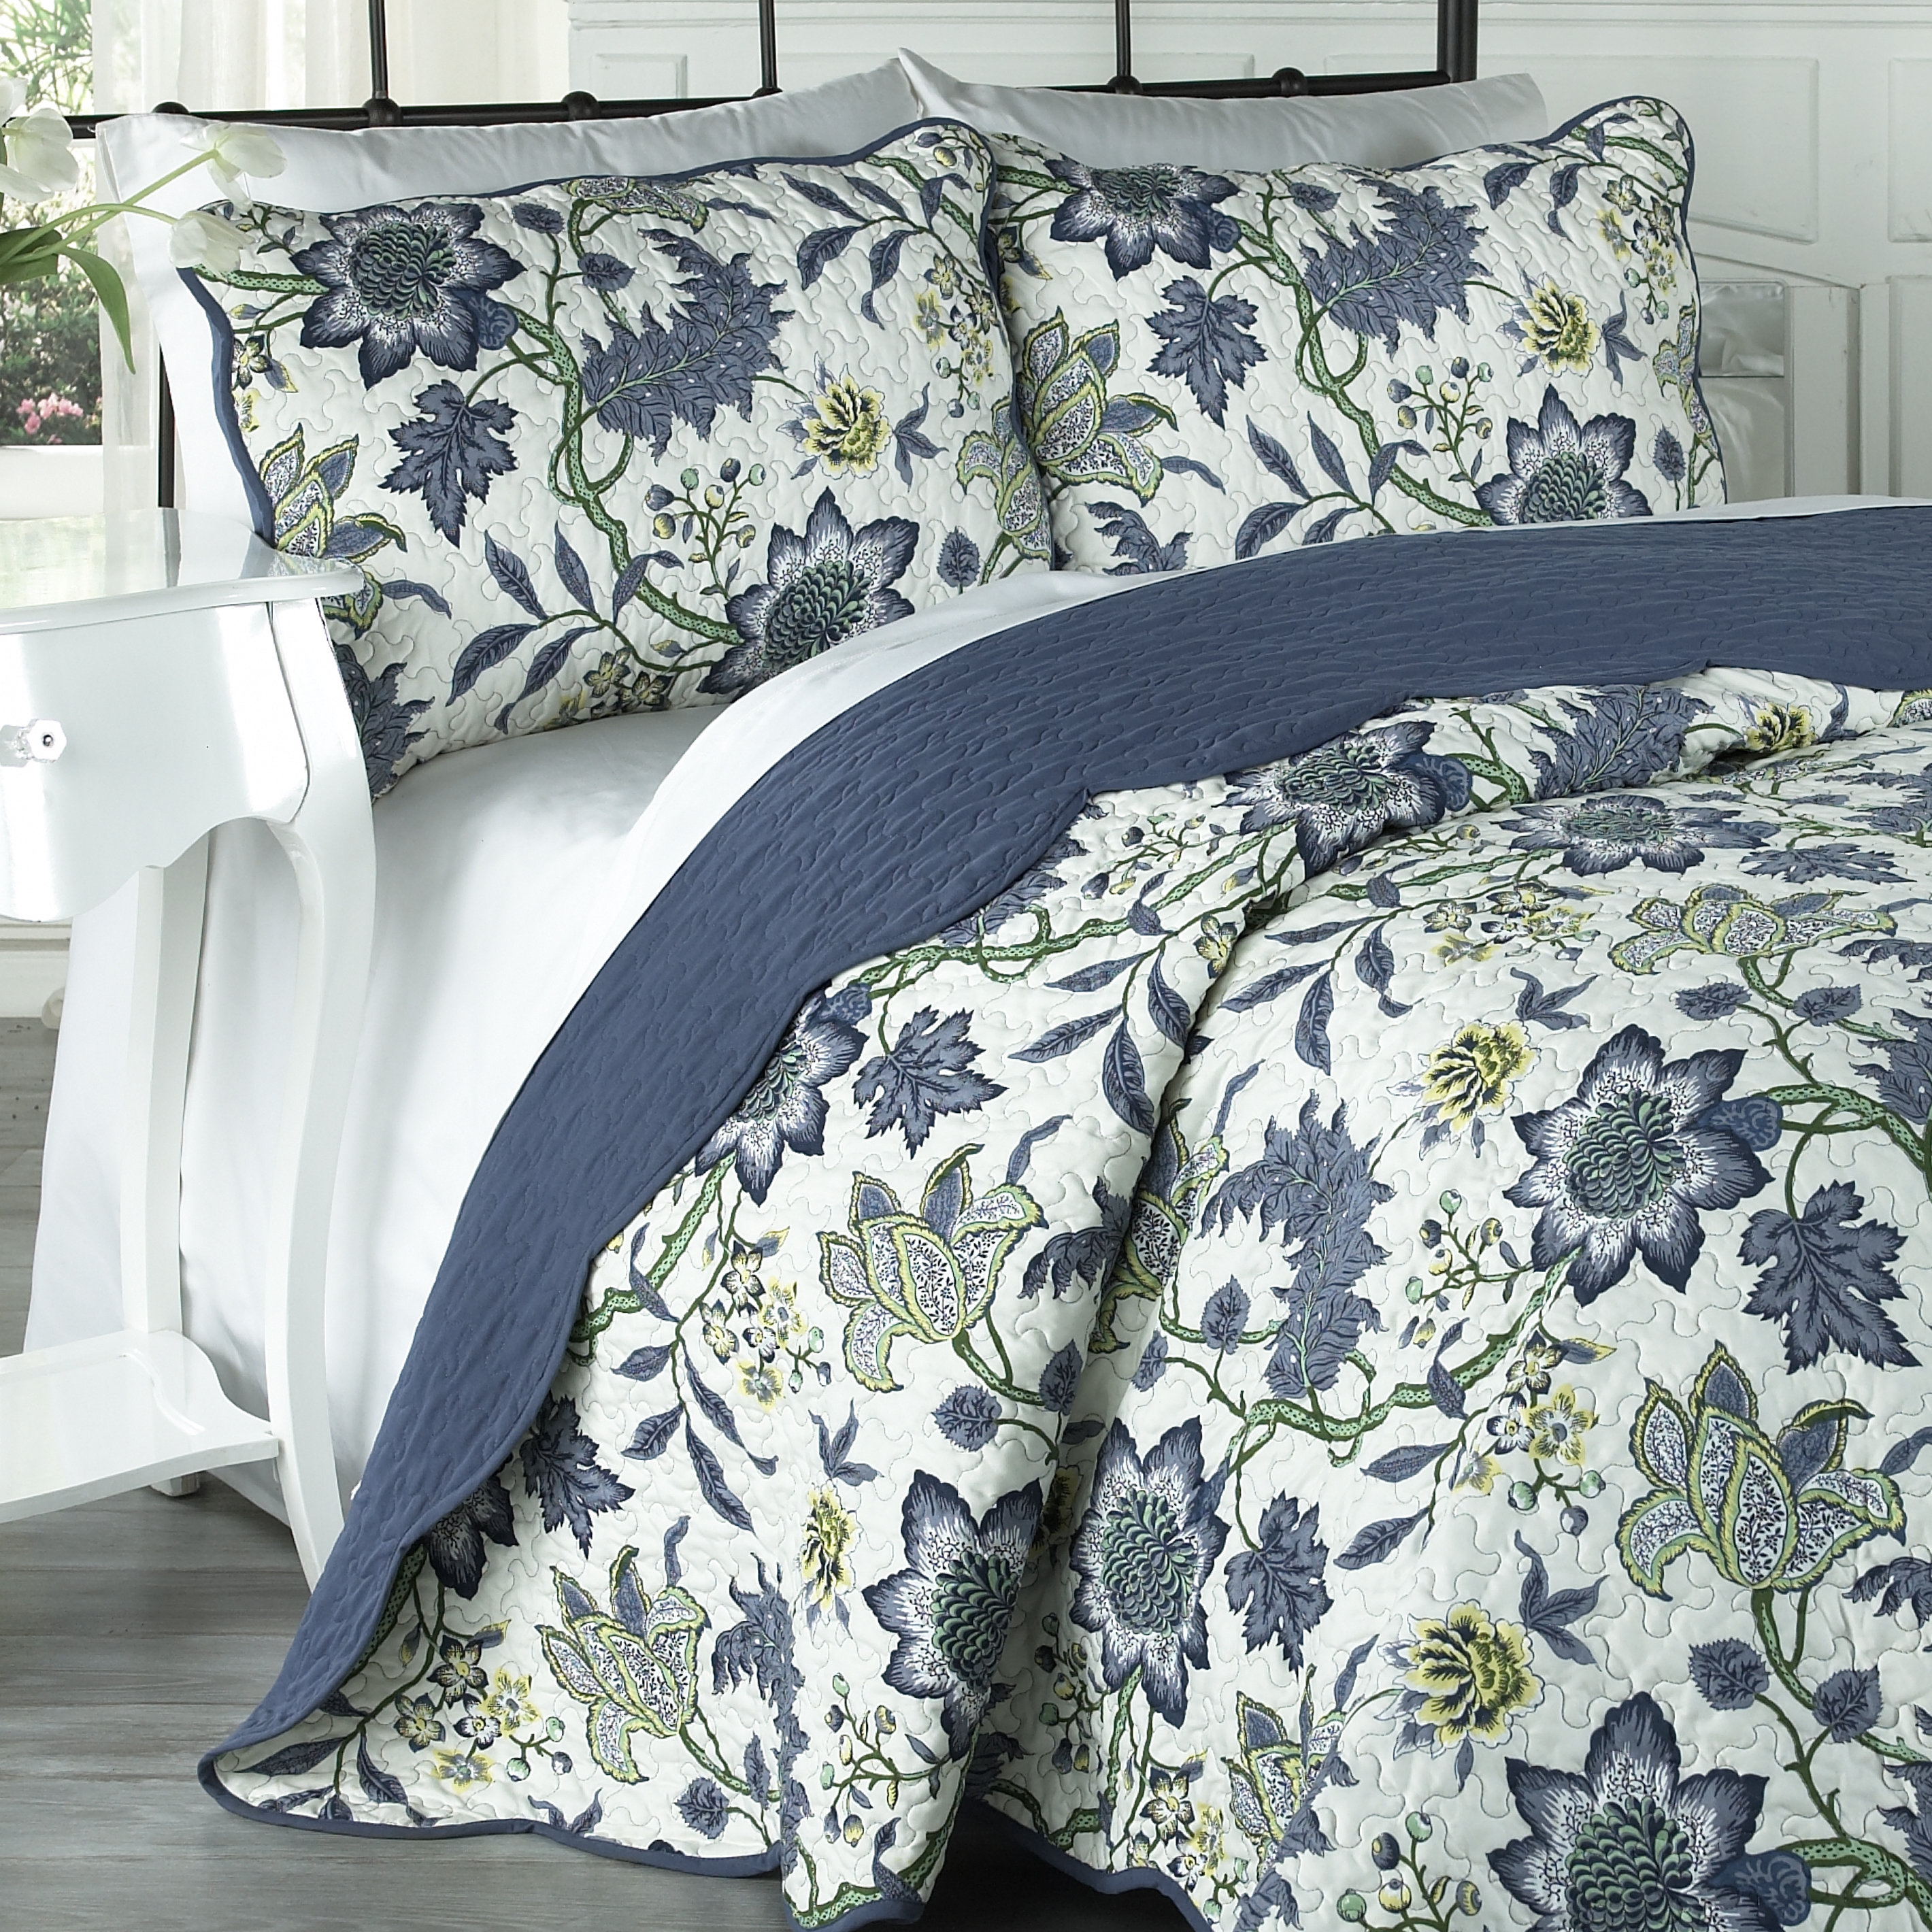 Quilt Set King Comforter Bed Cover Patchwork Pattern Navy Blue White Bedding 